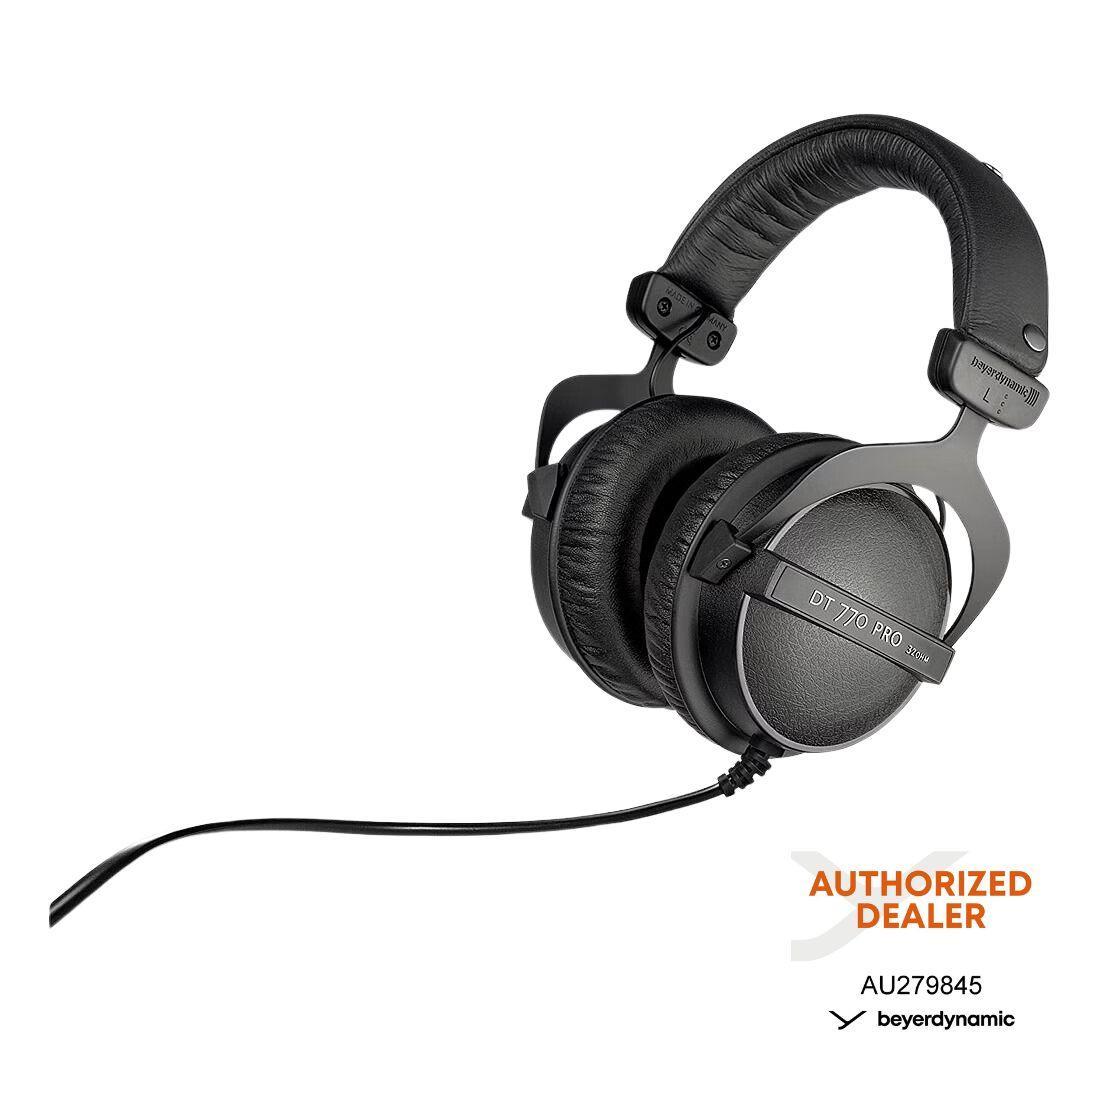 Beyerdynamic DT 770 PRO 32 Ohm Closed Studio Headphones - Black